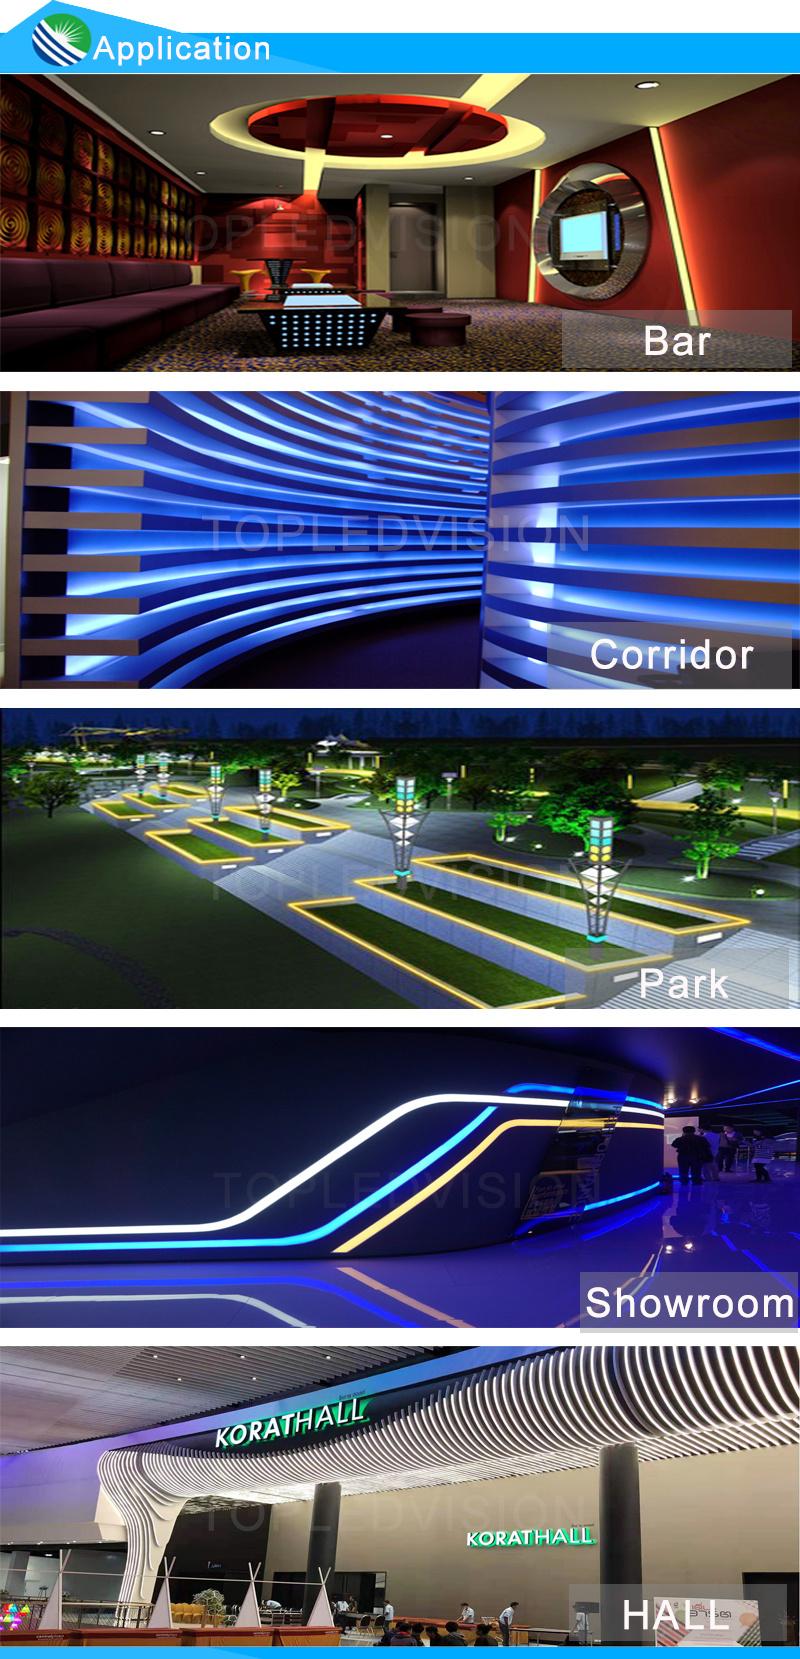 Muti Colors Flexible RGB LED Strip Light 60LEDs/M LED Neon Rope Lights for Bar Home Decor